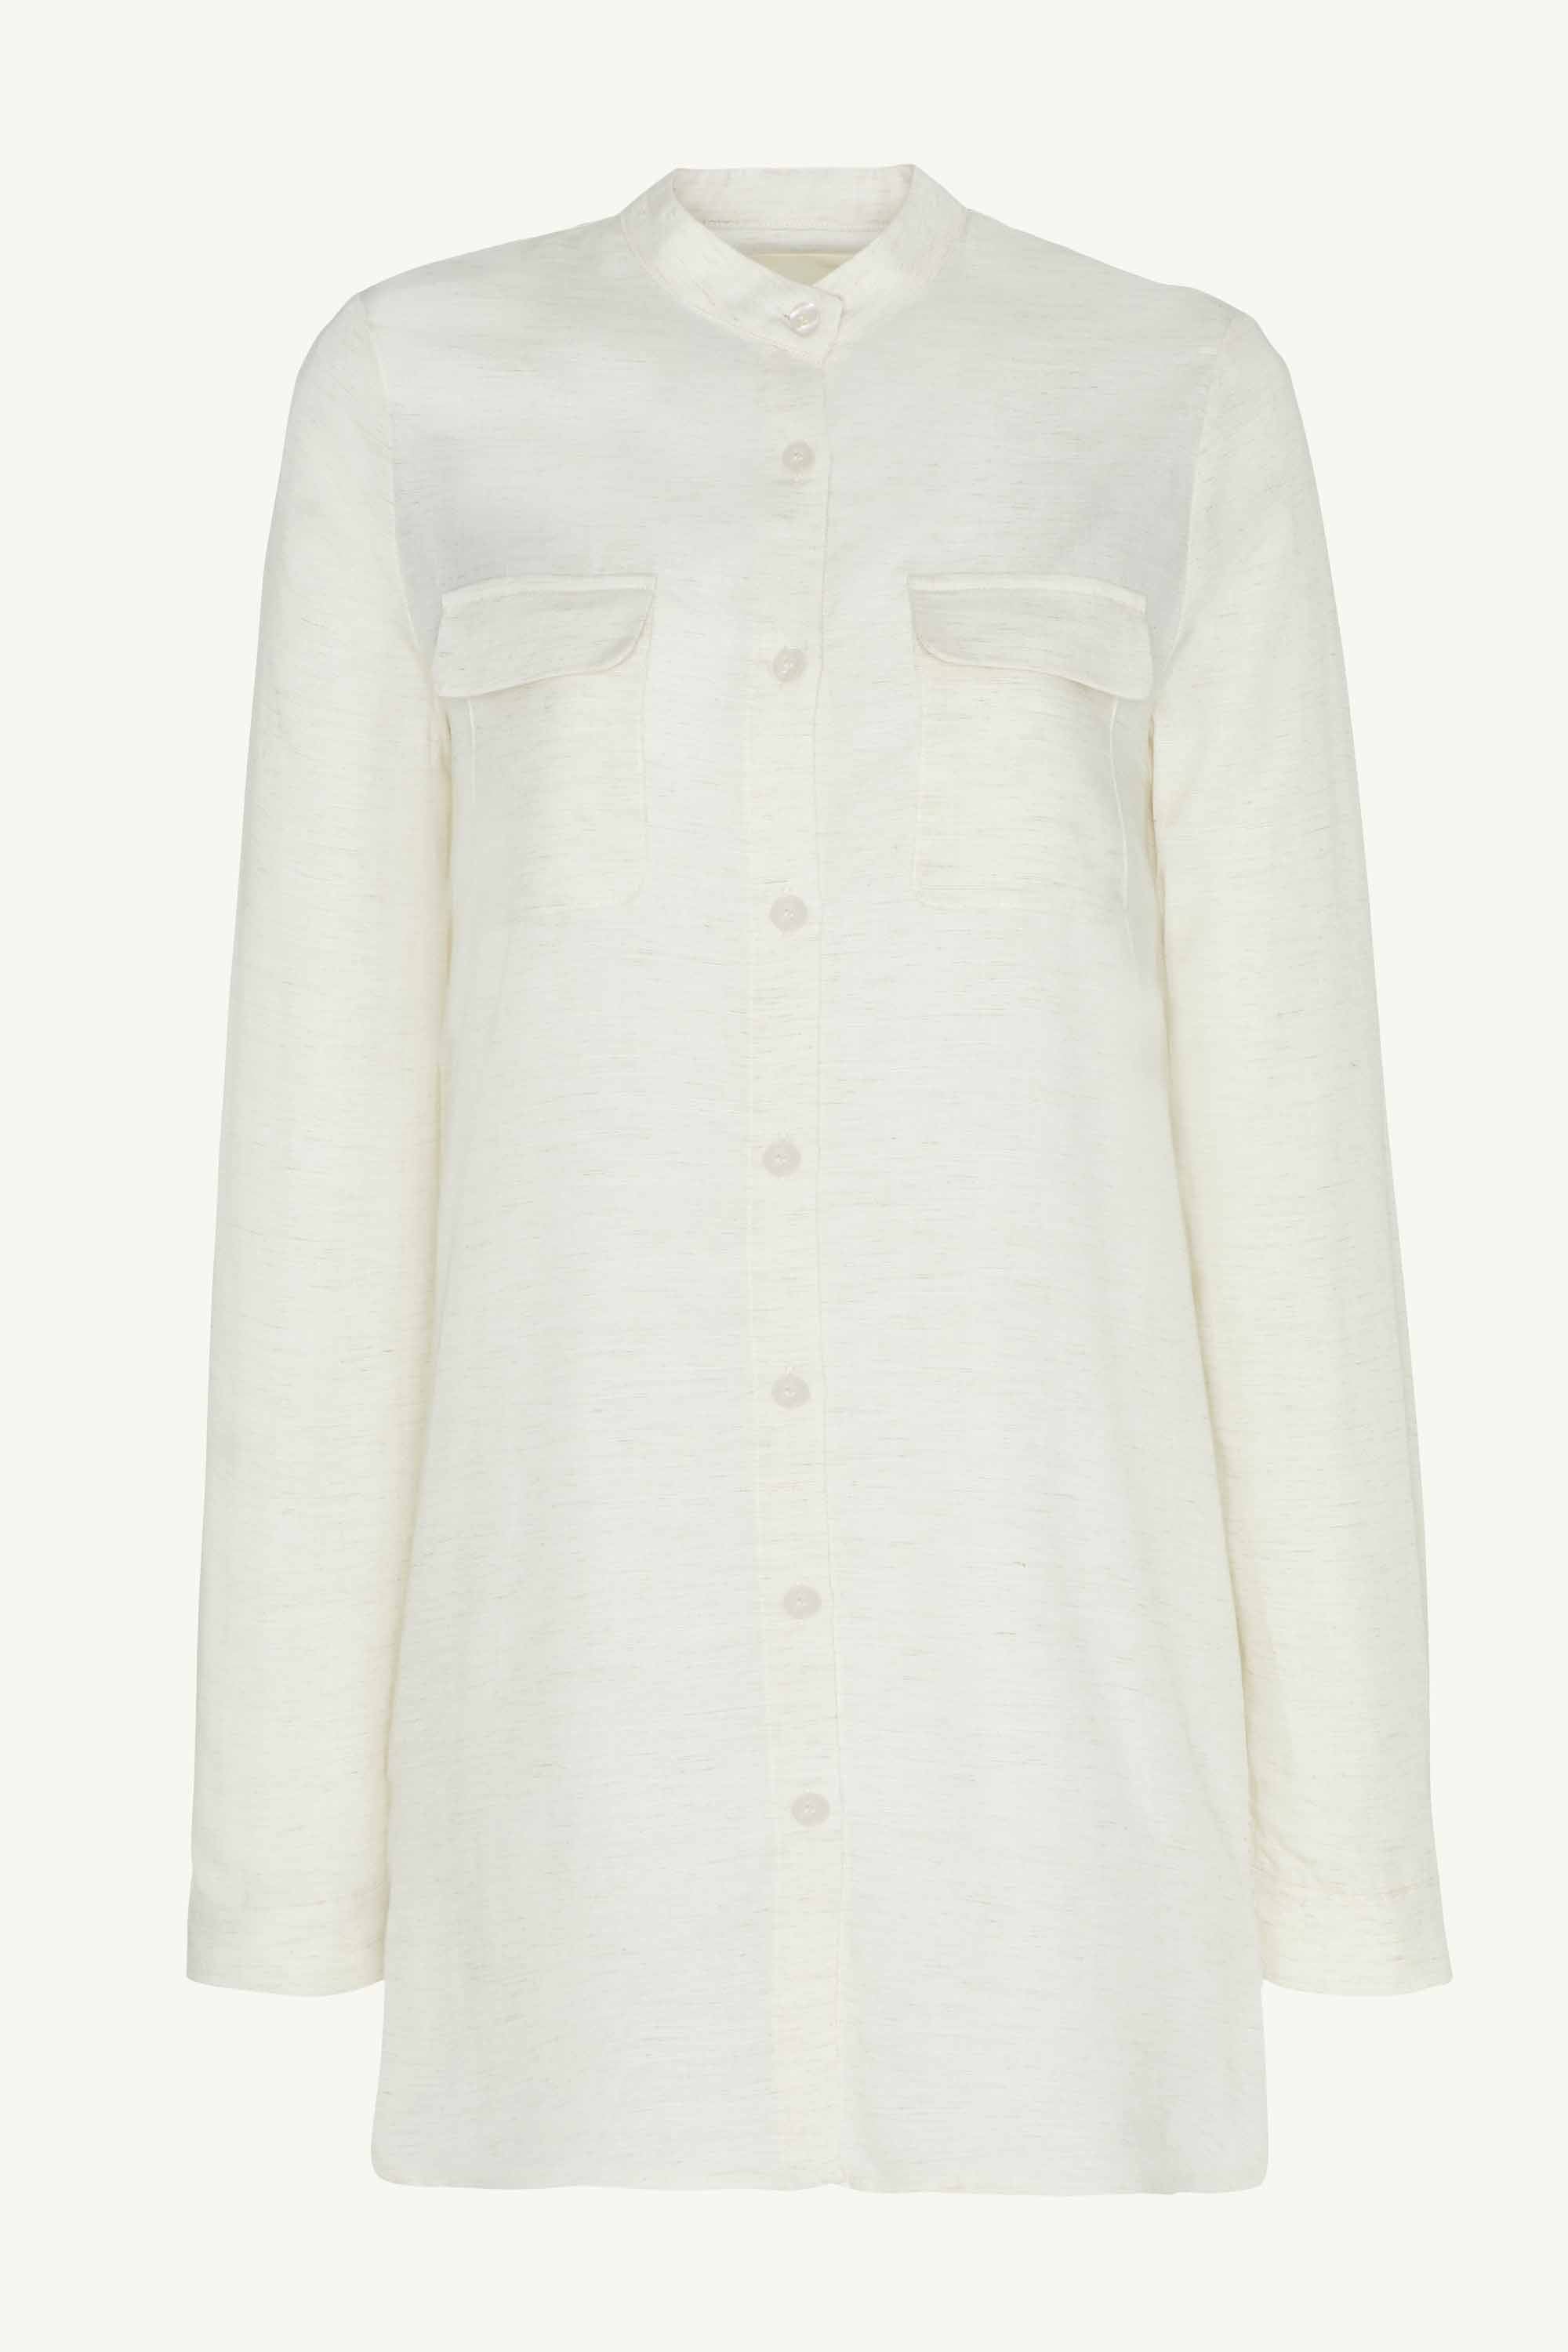 Lamia Cotton Linen Button Down Top - White Clothing Veiled Collection 